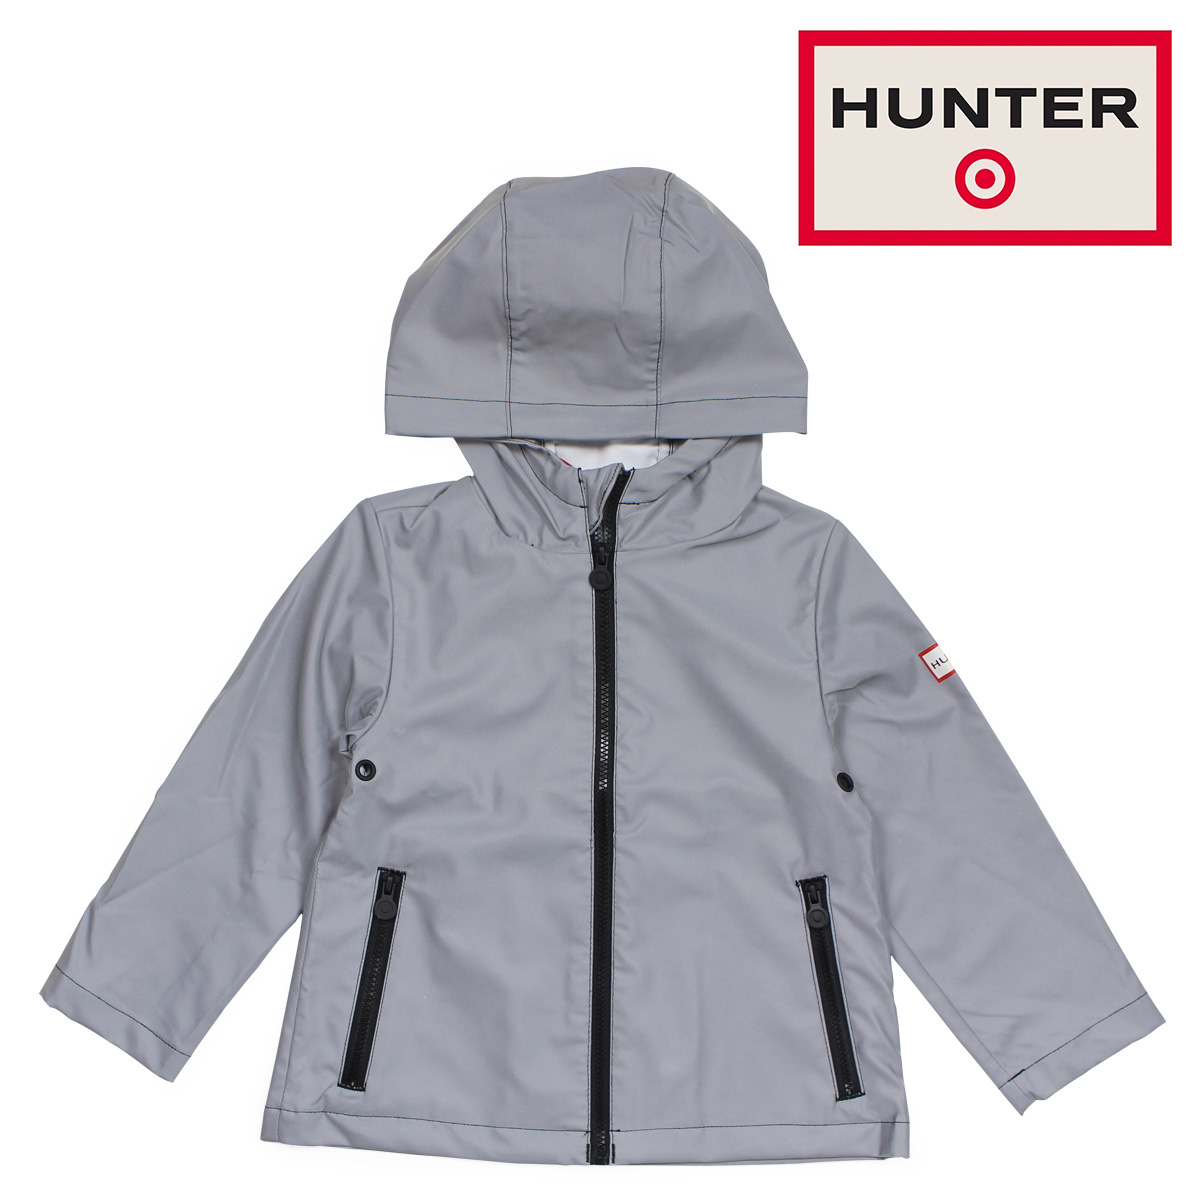 hunter rain jacket target